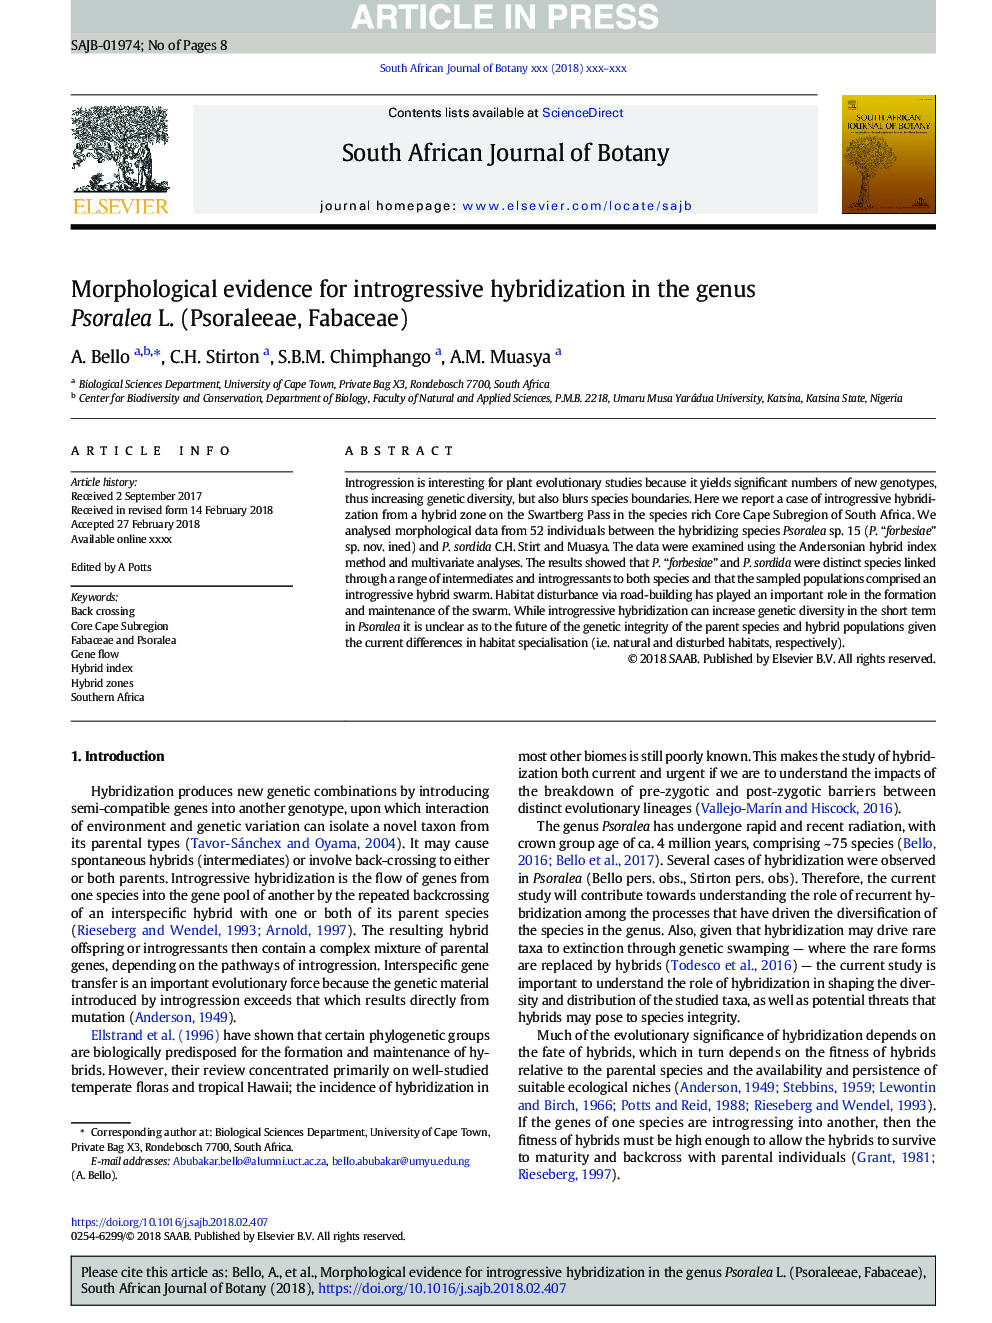 Morphological evidence for introgressive hybridization in the genus Psoralea L. (Psoraleeae, Fabaceae)